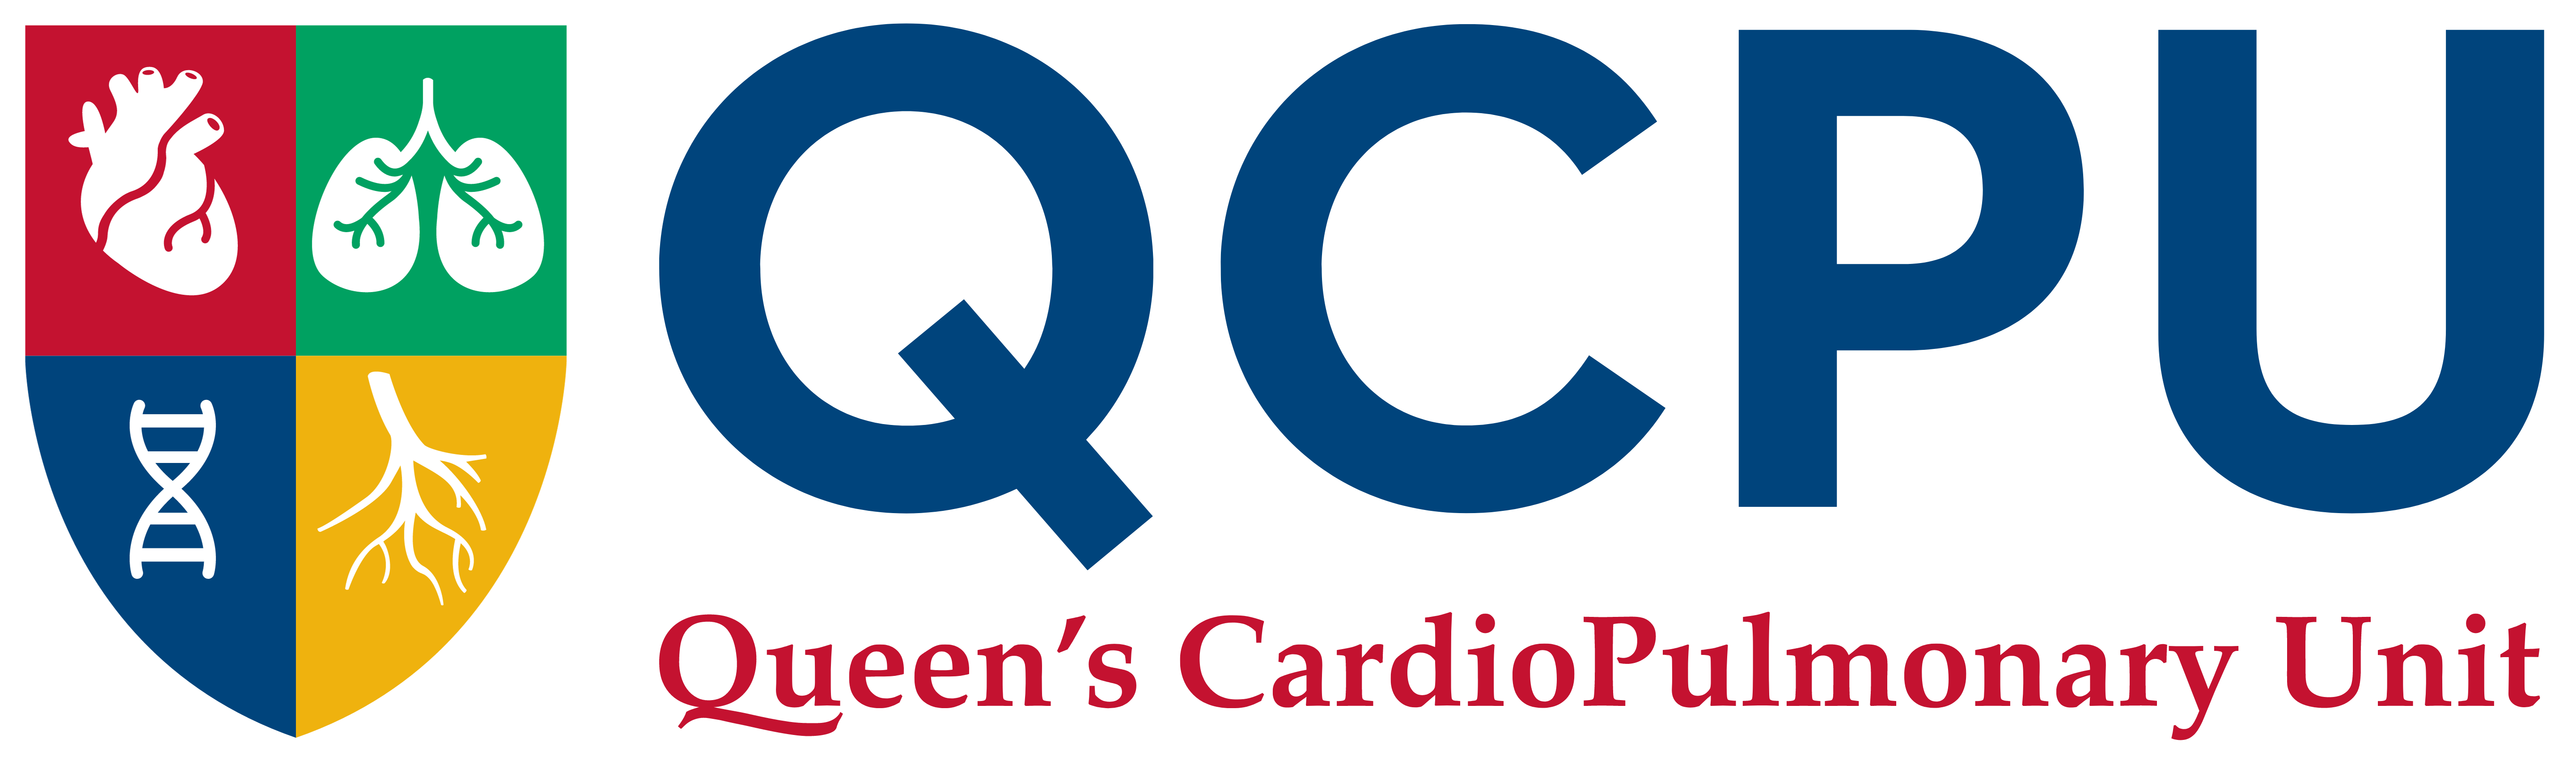 Queen's CardioPulmonary Unit